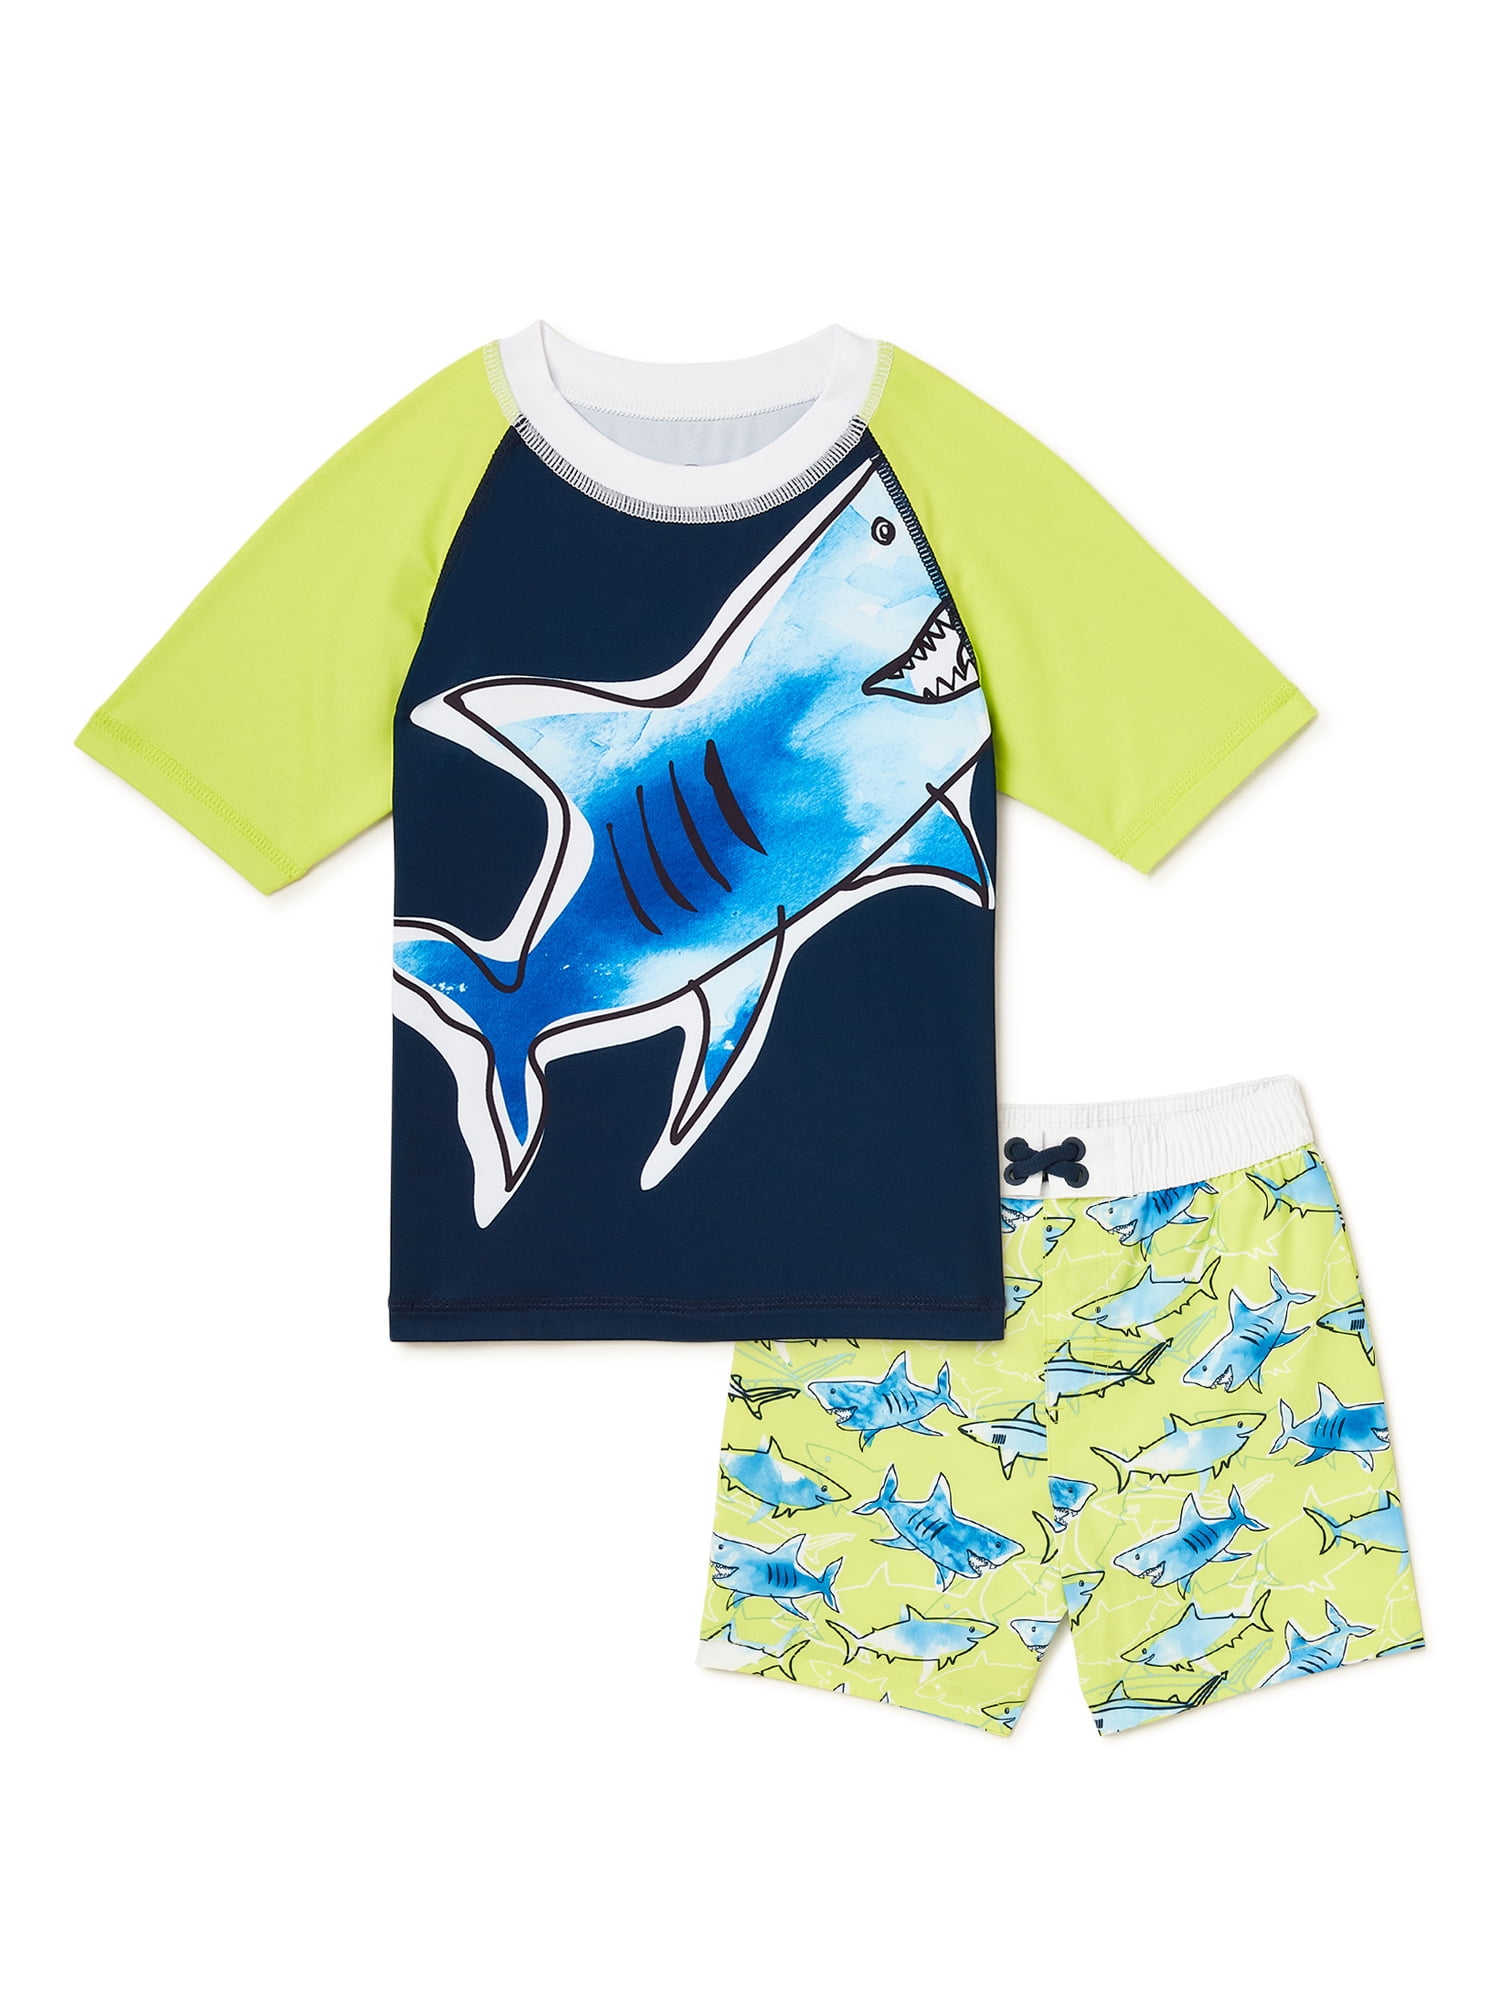 Blue Shark Baby Toddler Boys Two Piece Rash Guard Swimsuits Kids Short Sleeve Sunsuit Swimwear Sets with Hat UPF 50 